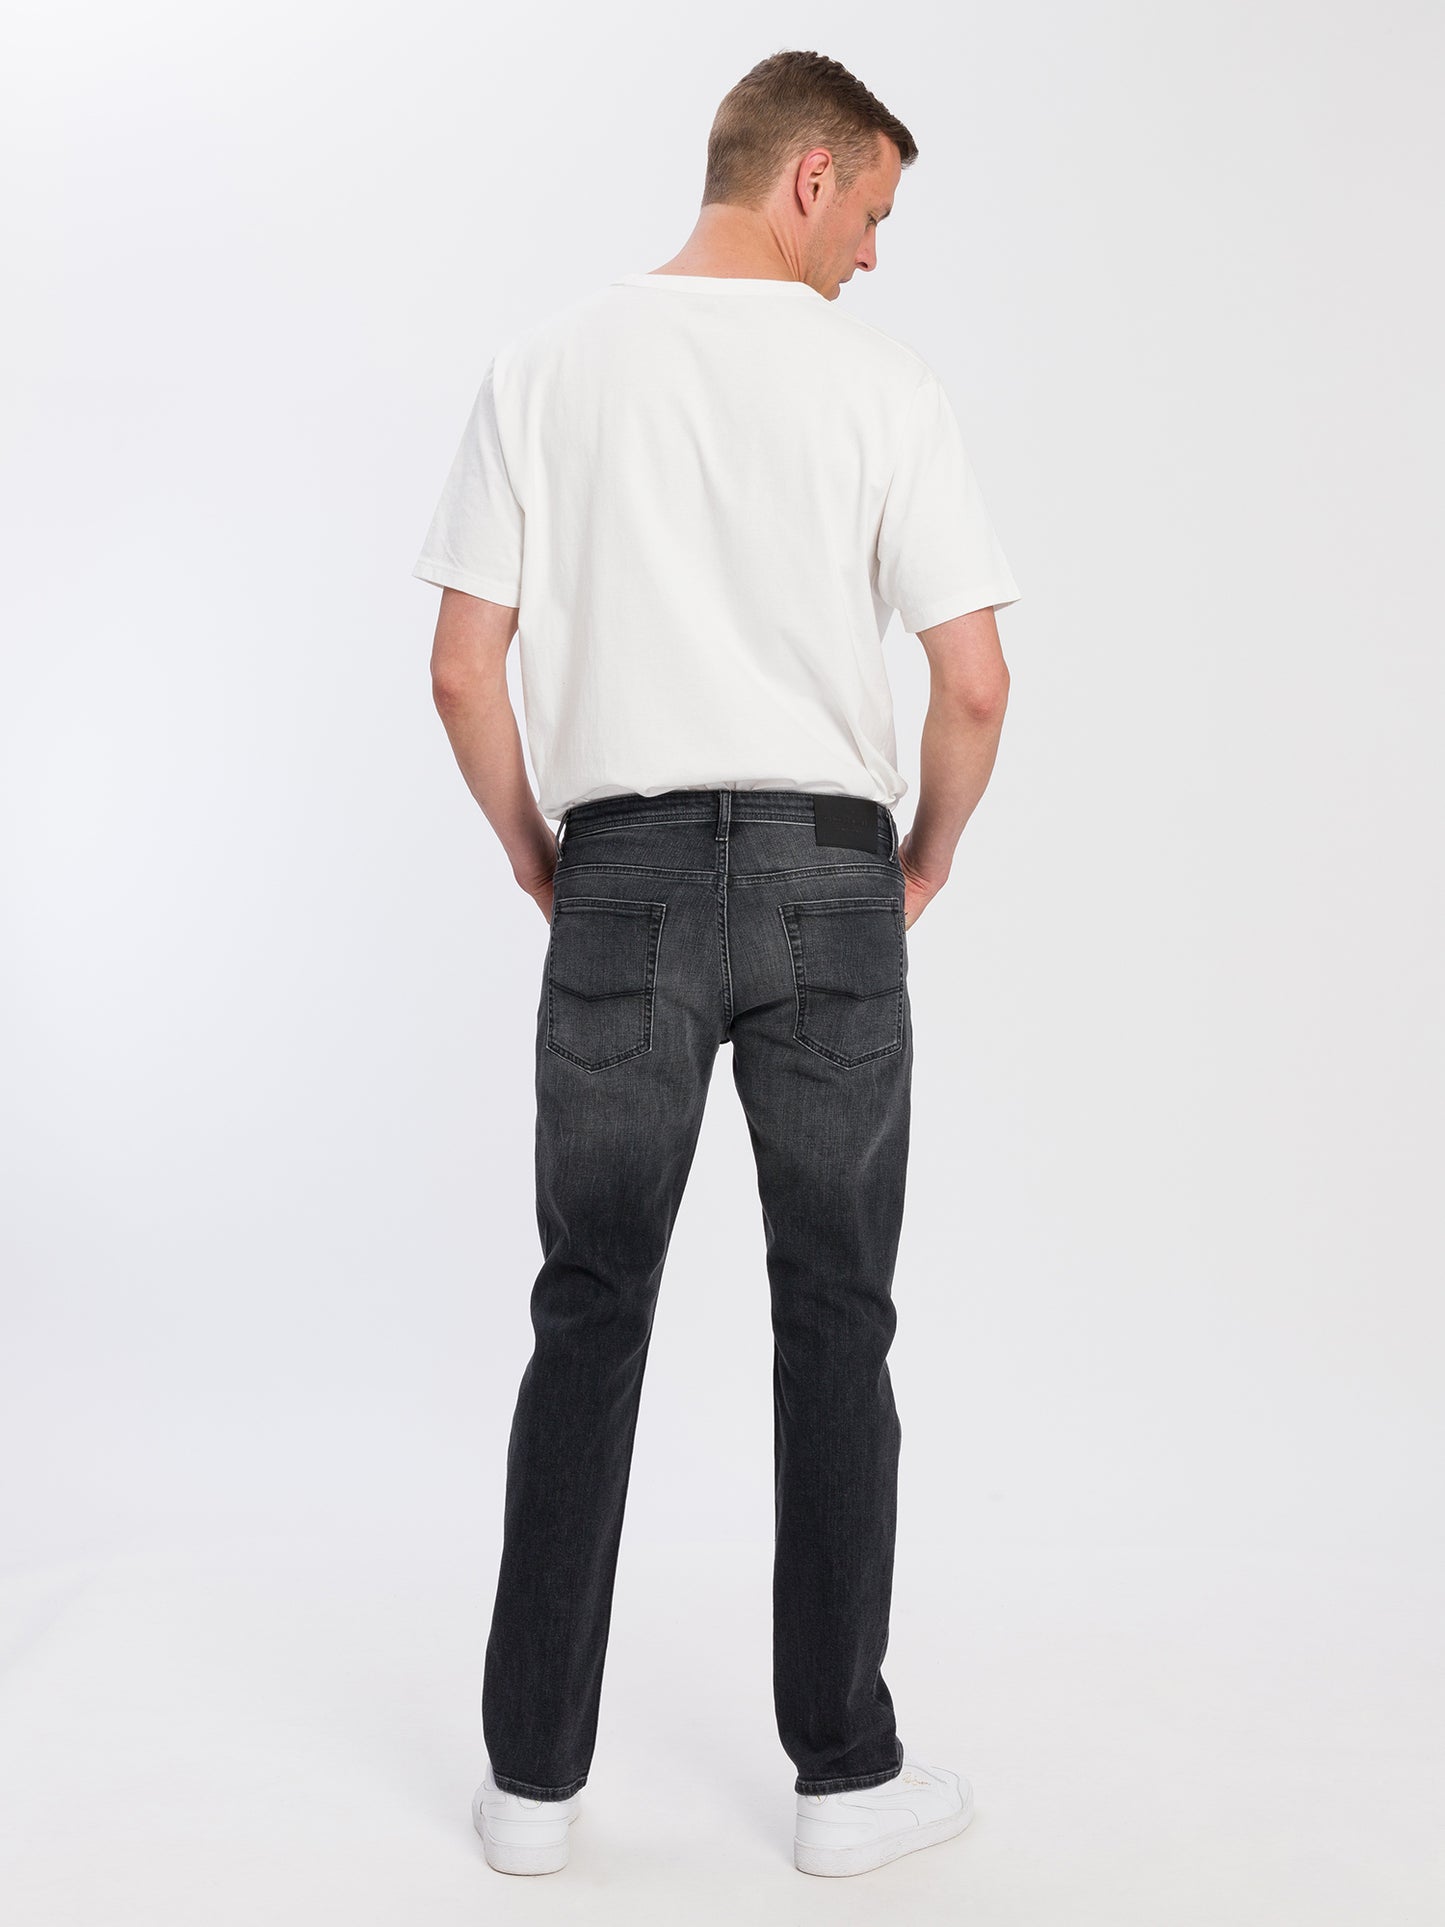 Dylan men's jeans regular fit regular waist straight leg dark grey